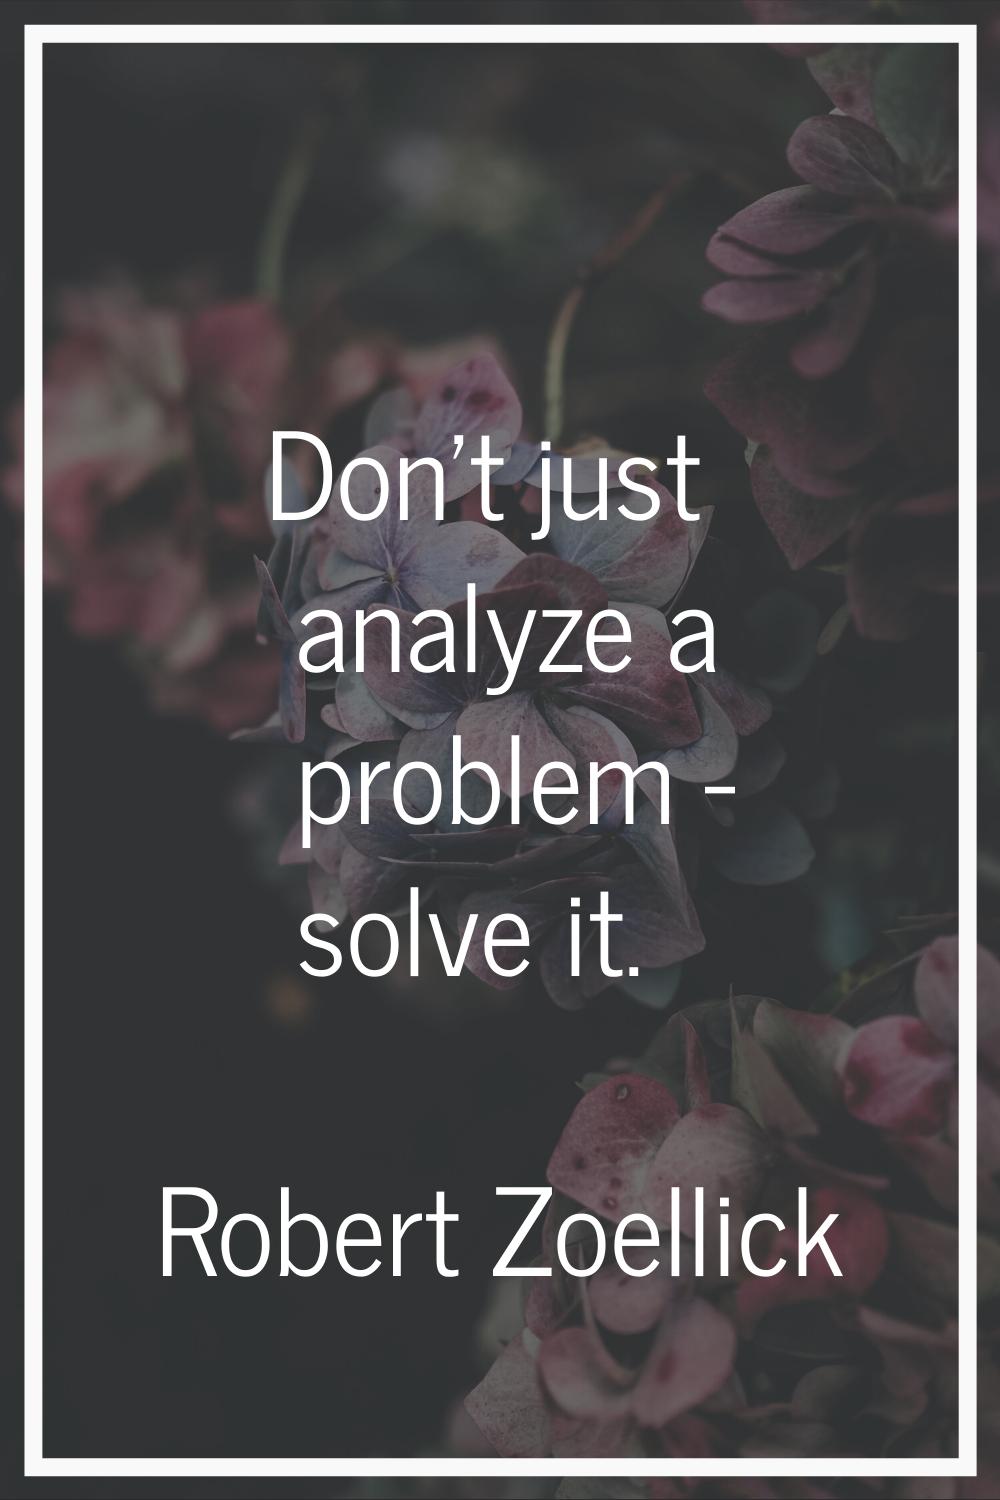 Don't just analyze a problem - solve it.